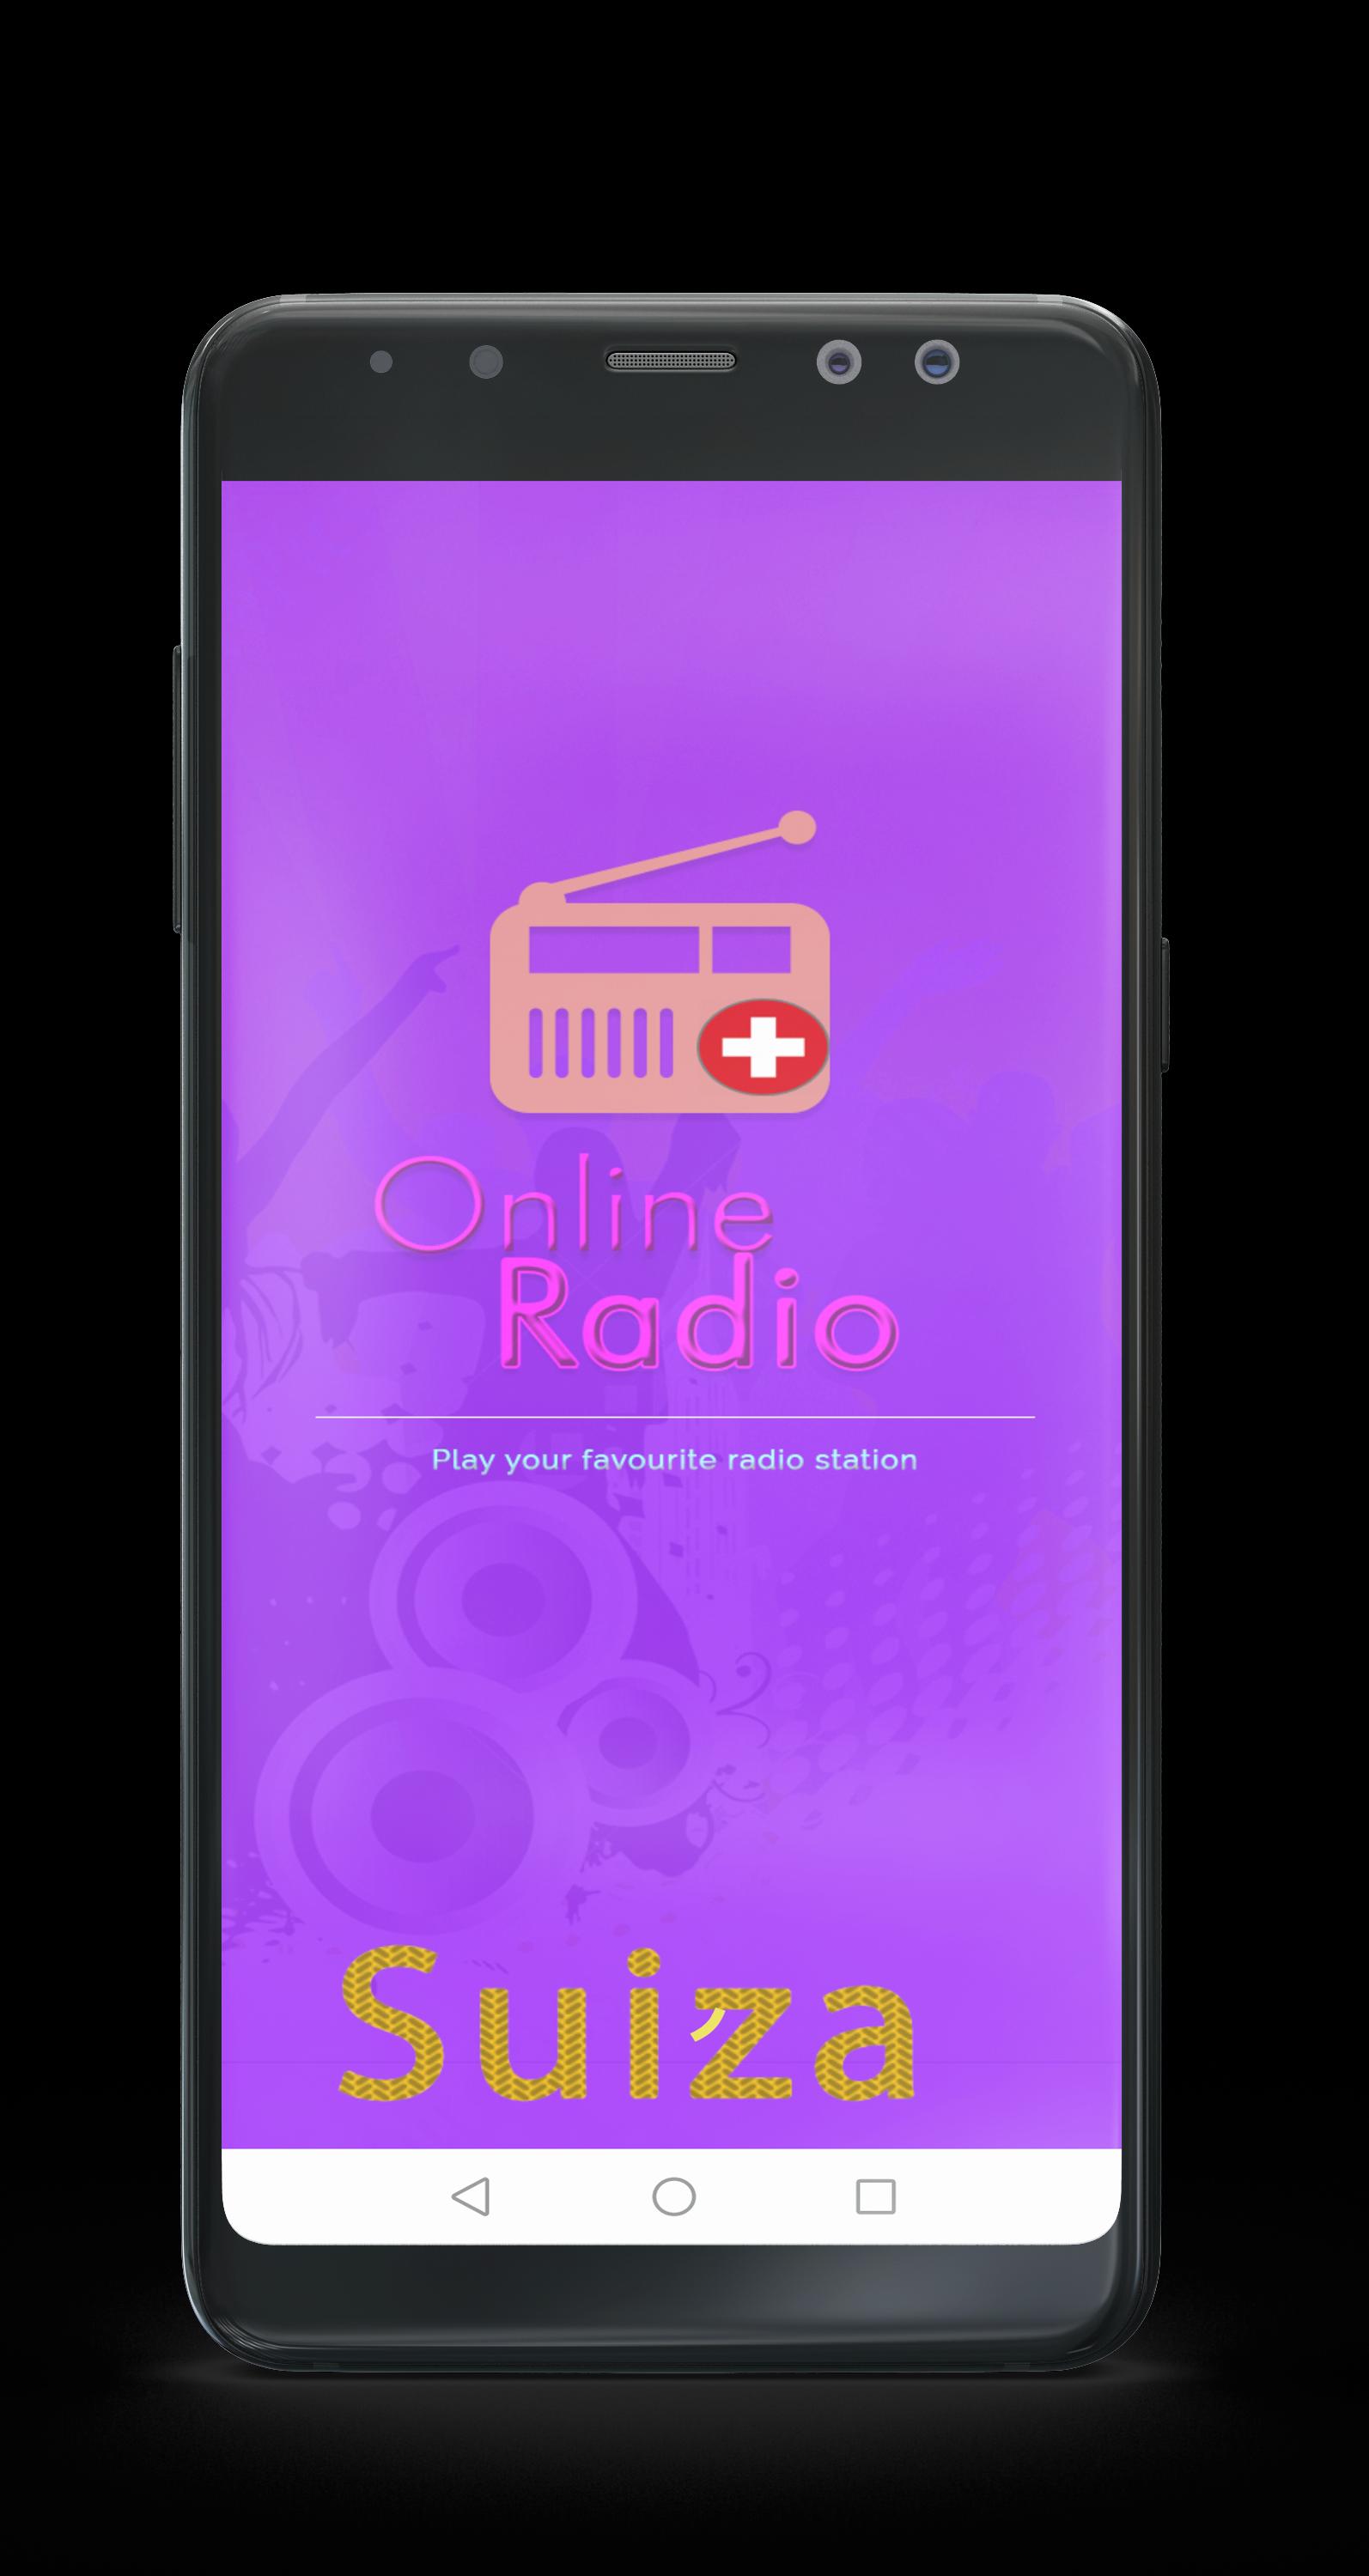 switzerland fm - Online Swiss FM Radio for Android - APK Download